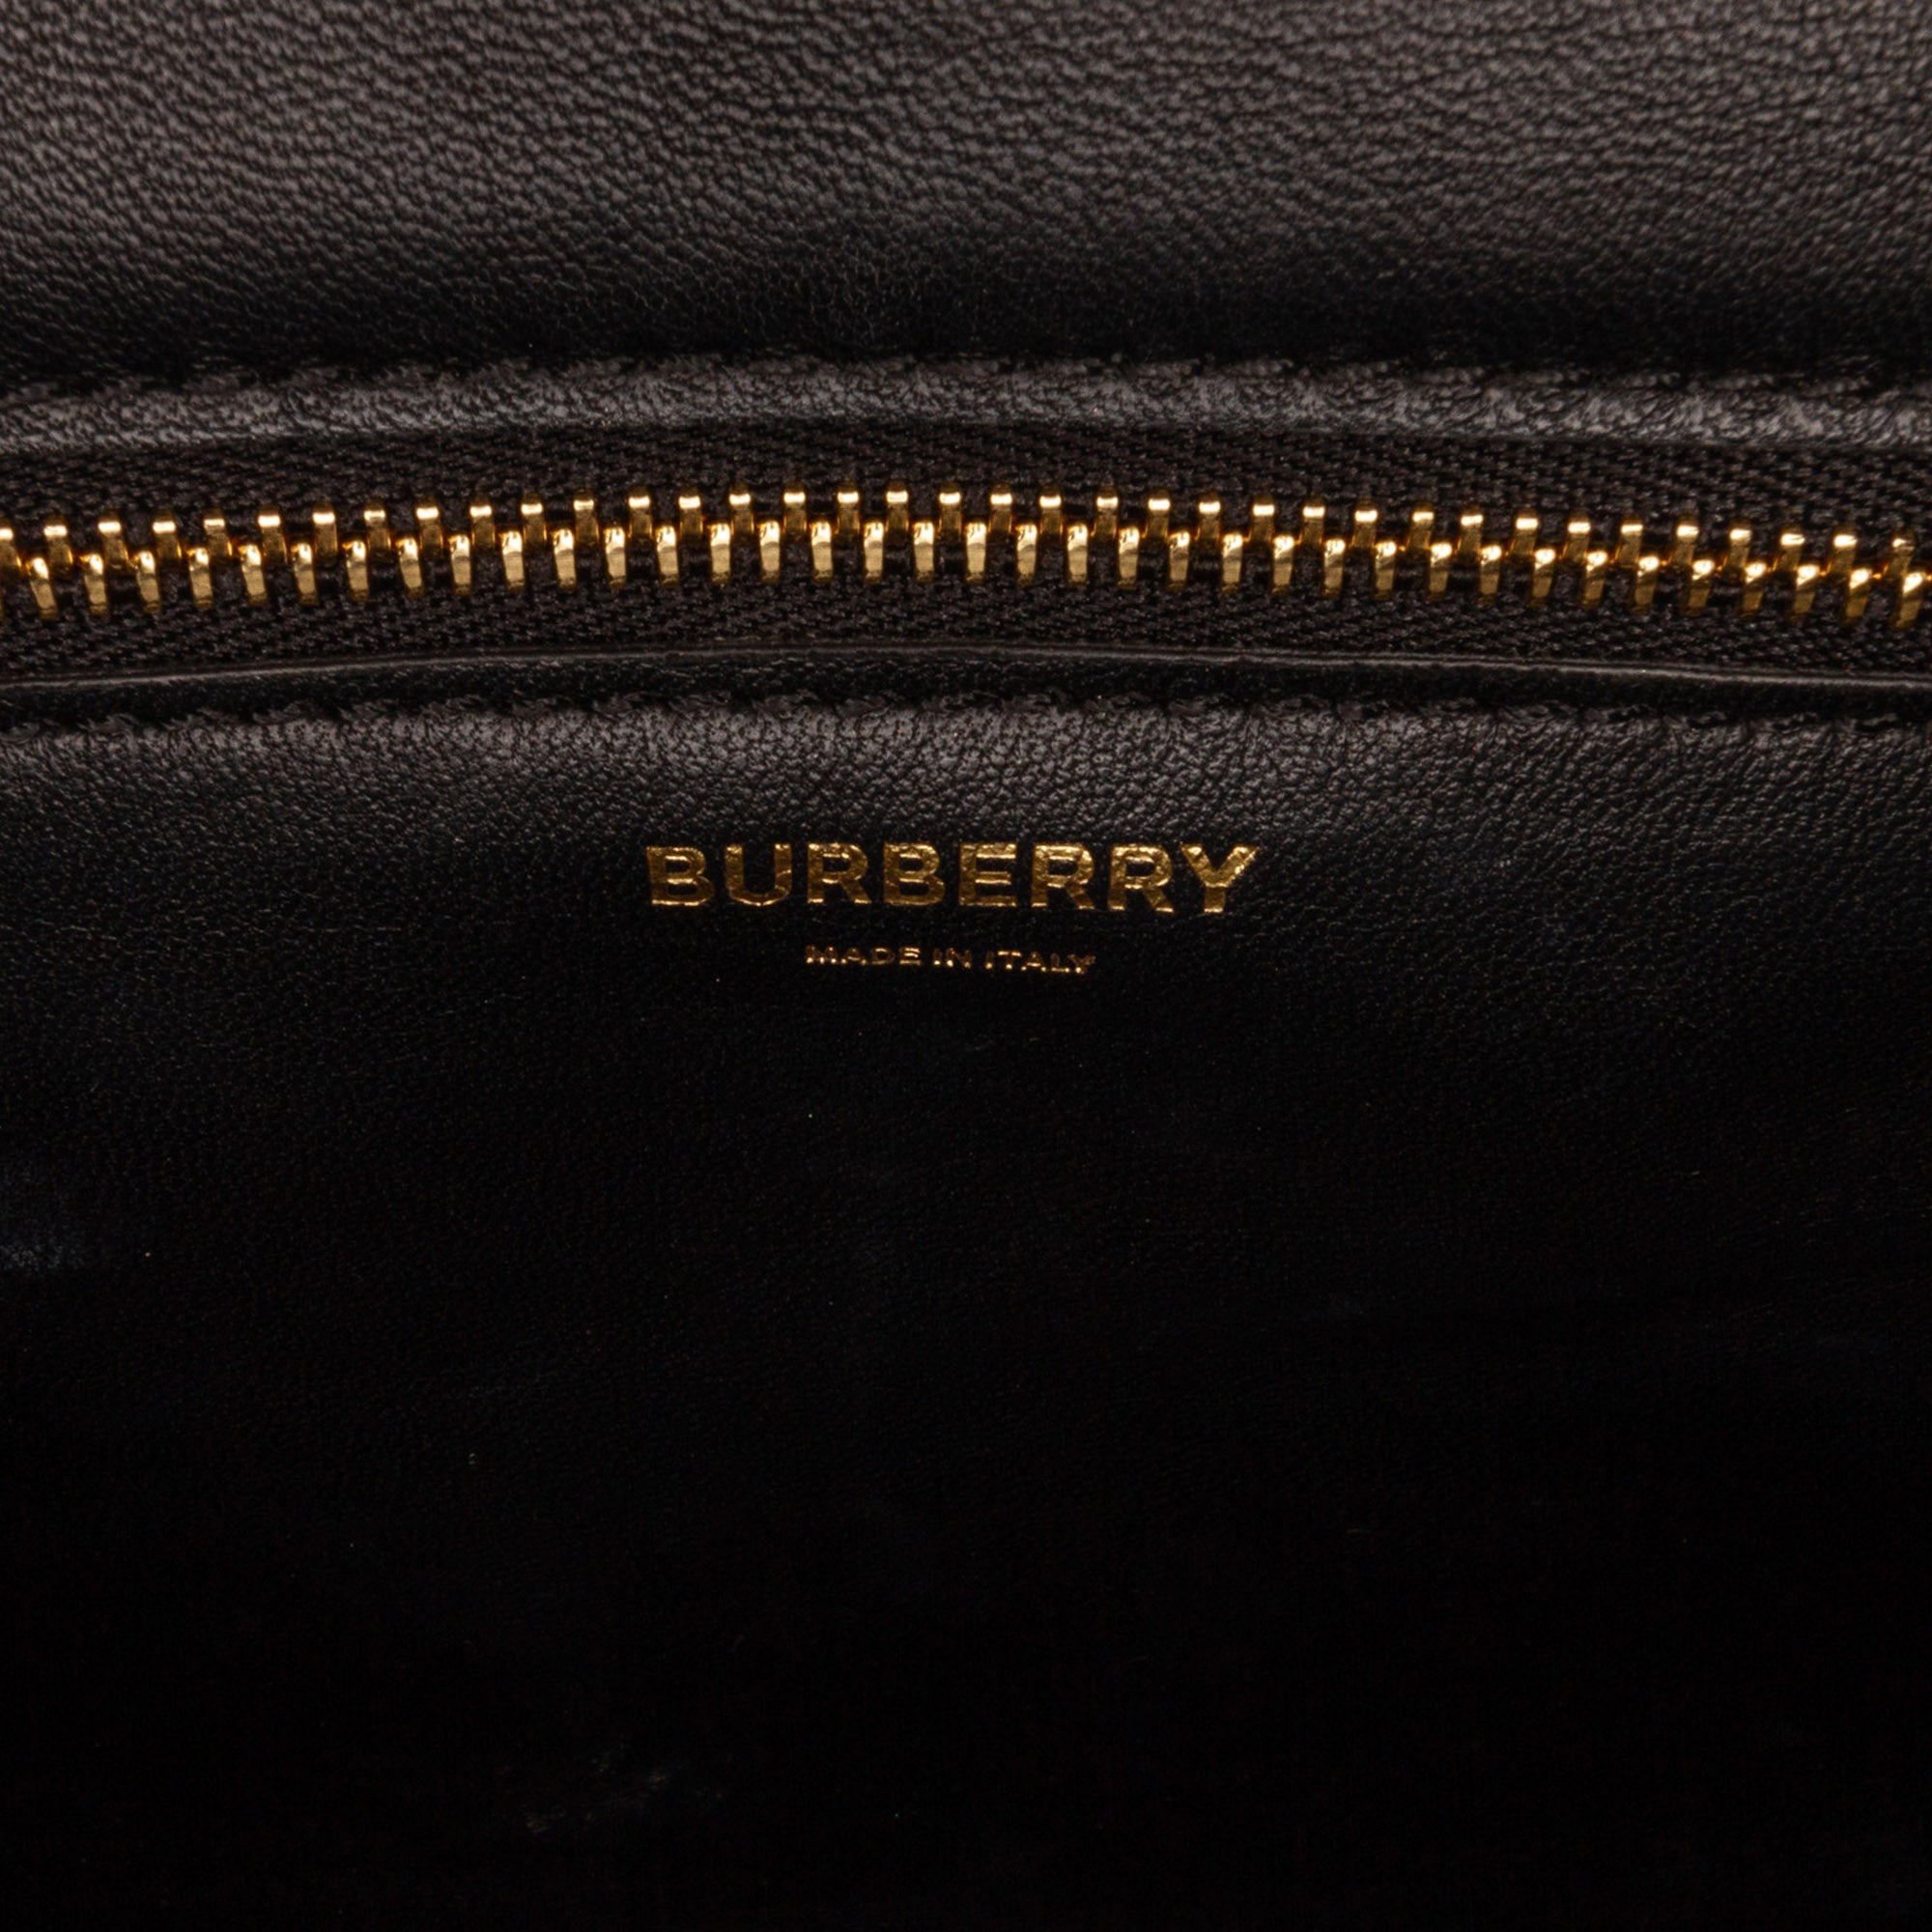 Black Burberry Leather Handbag, RvceShops Revival